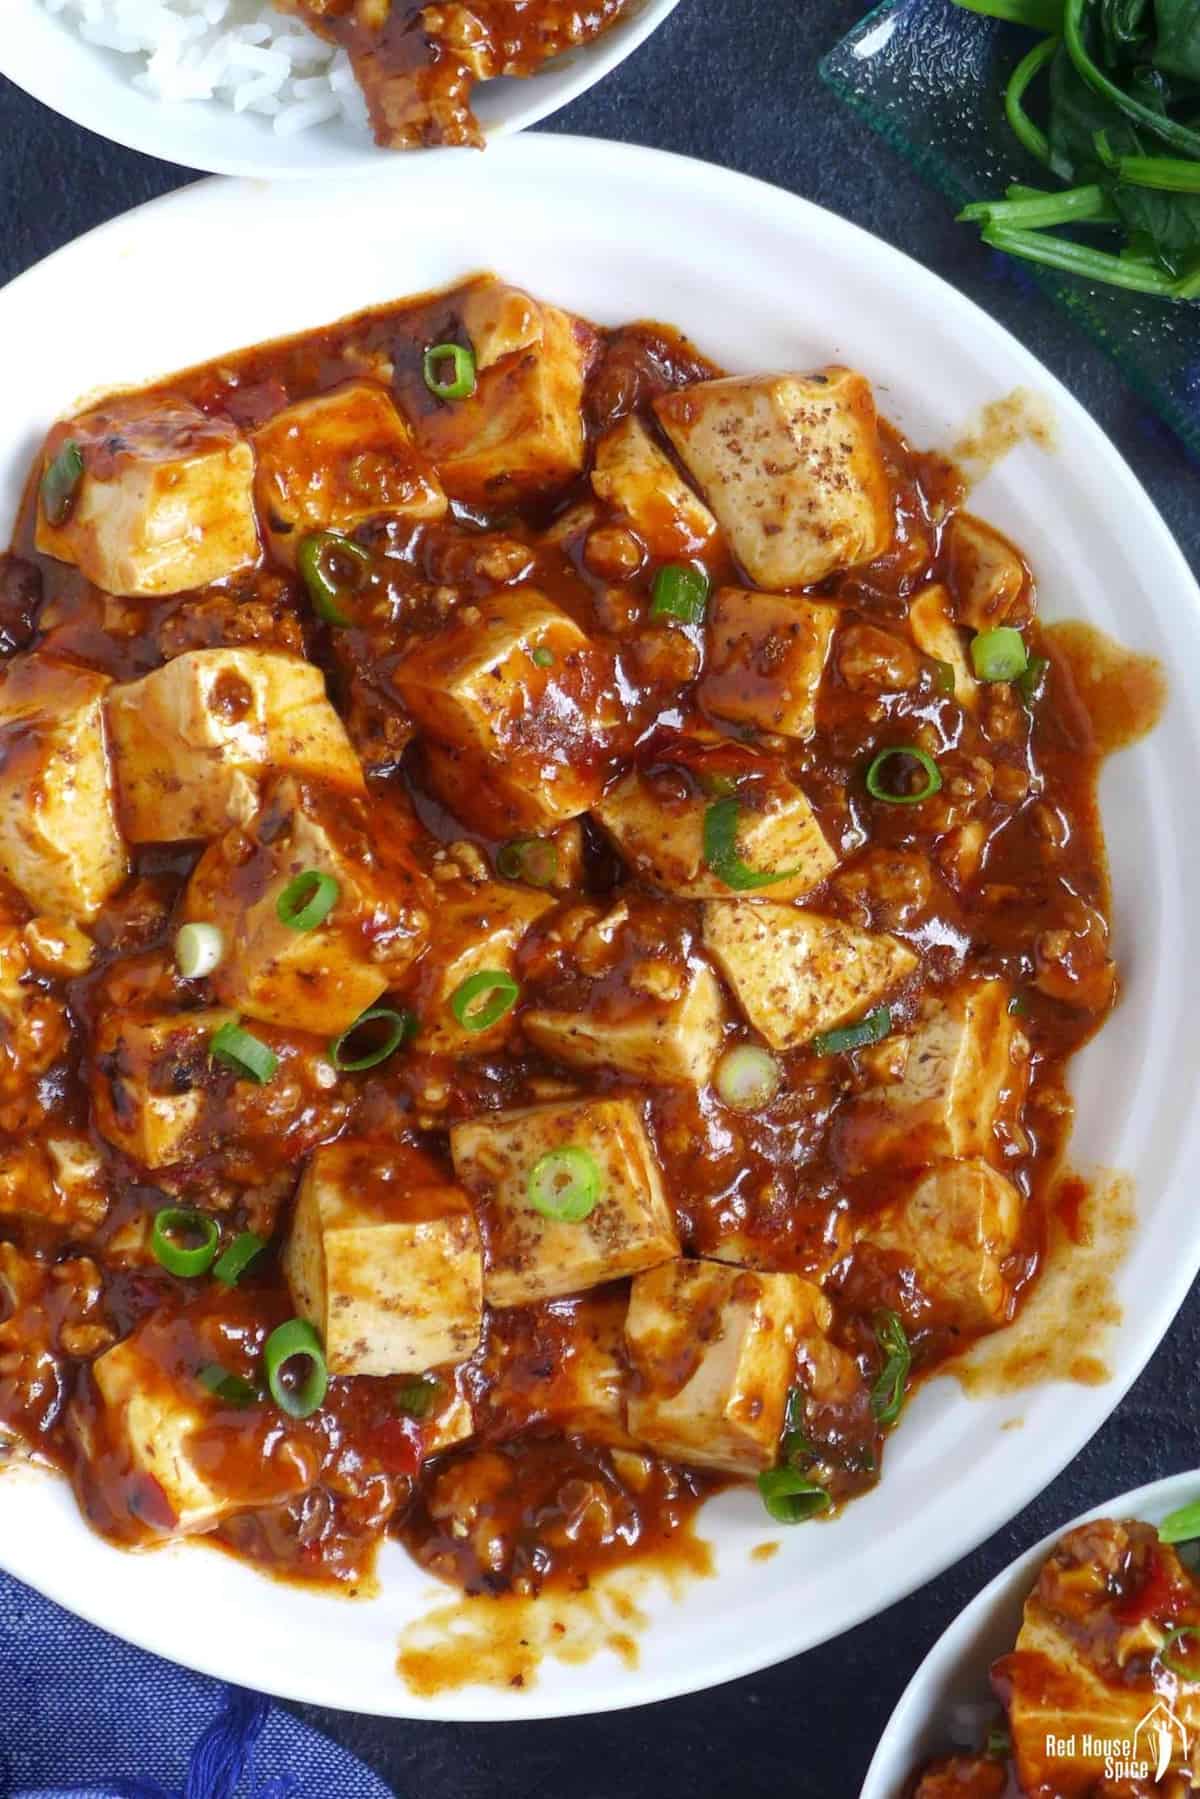 A plate of Mapo tofu